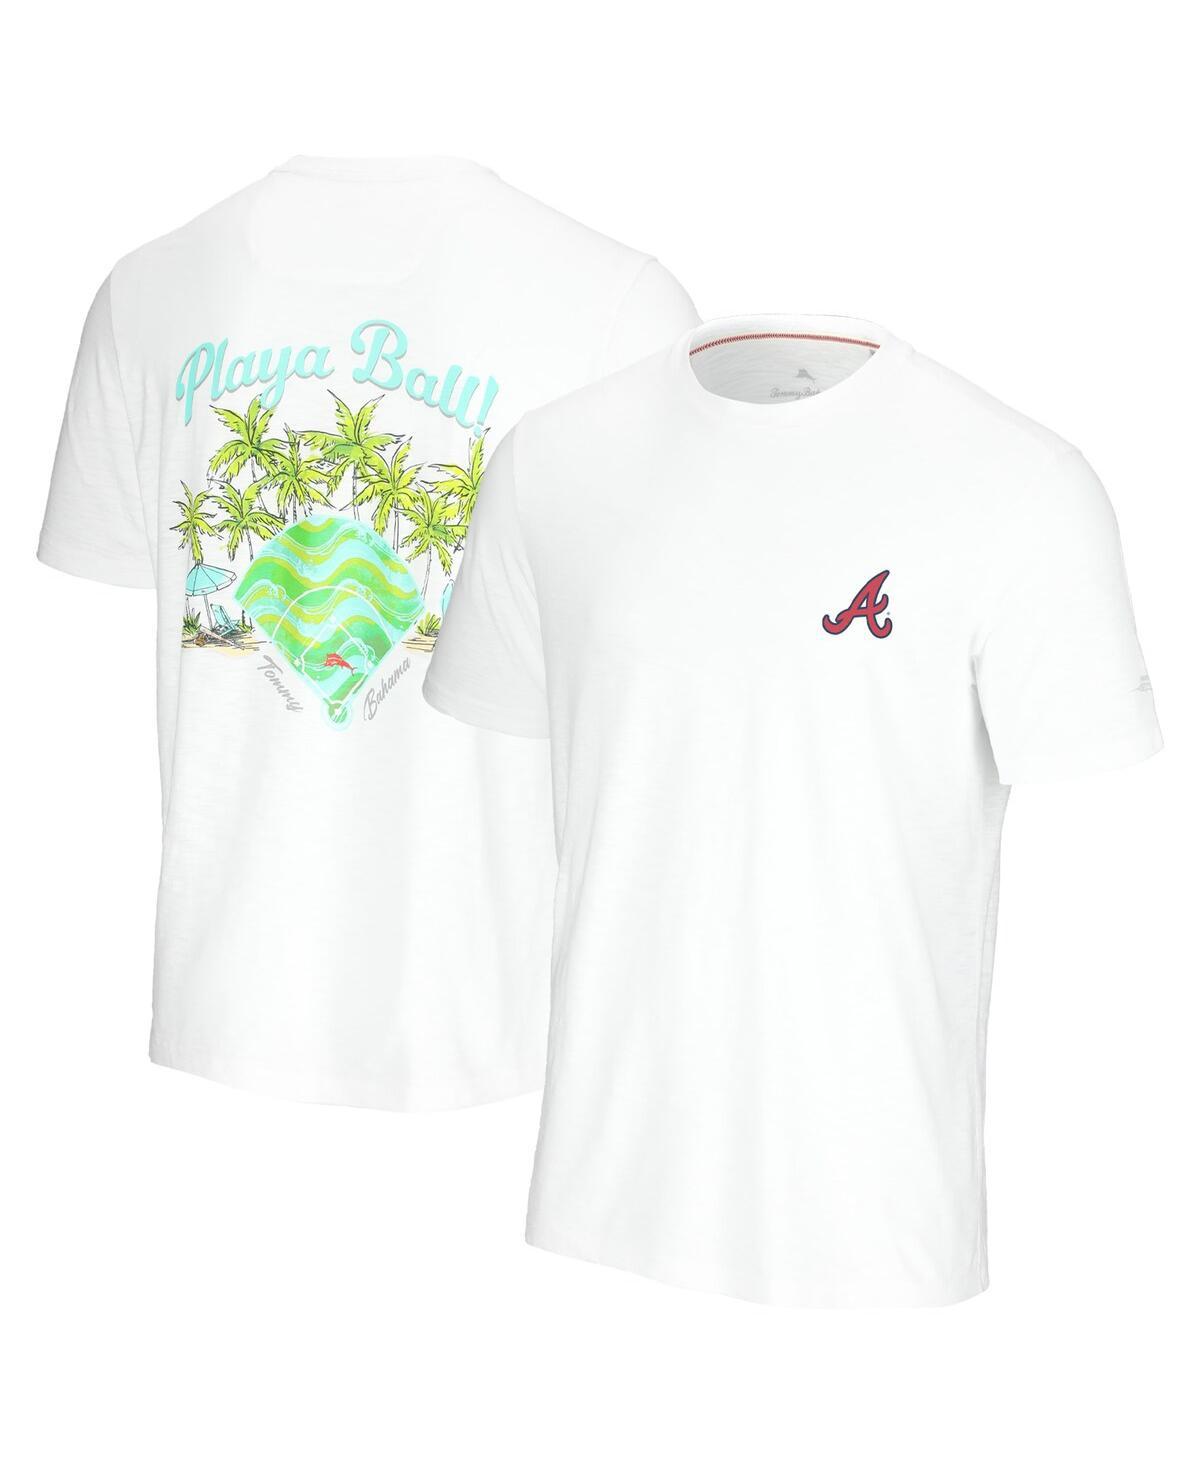 Tommy Bahama Atlanta Braves Playa Ball T-shirt in White for Men